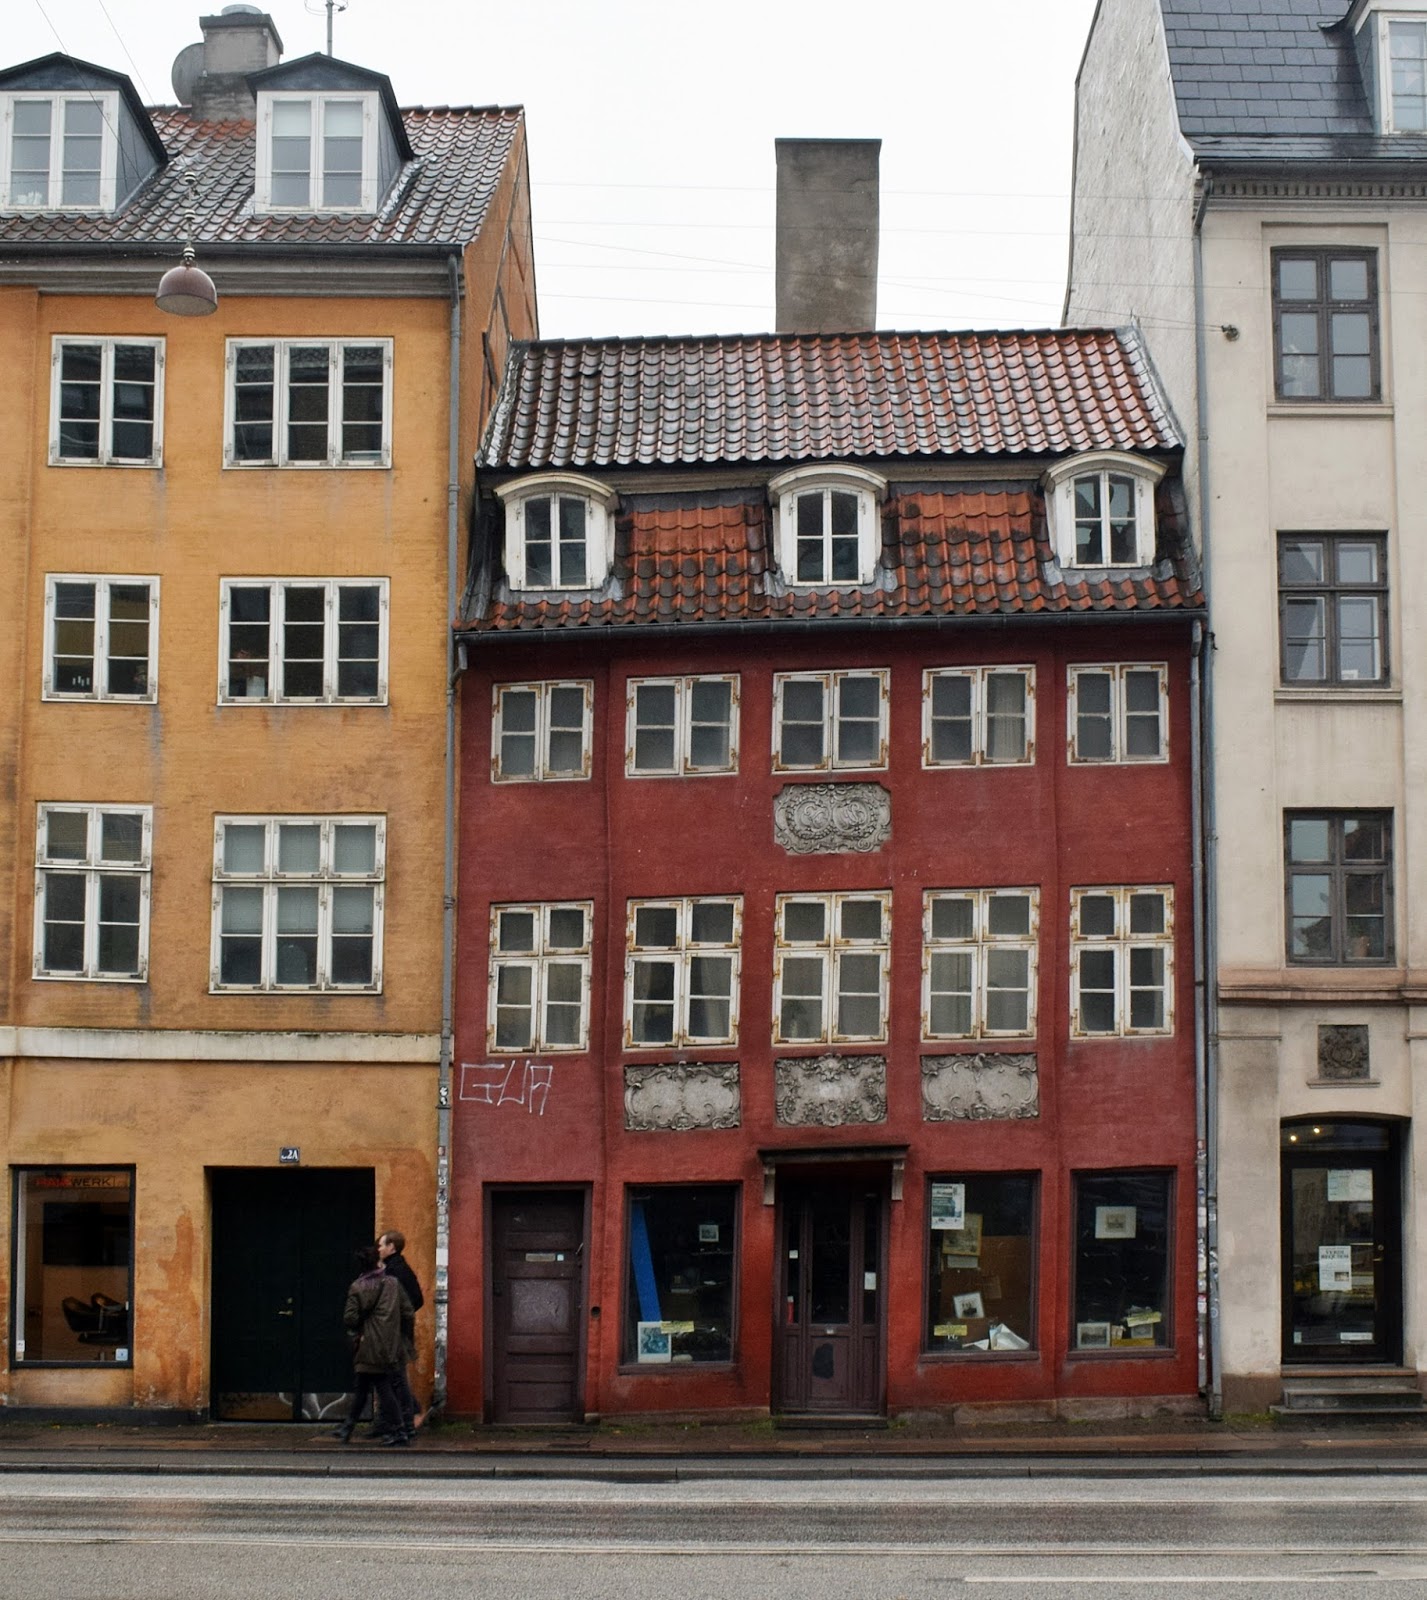 Streets of Christianshavn